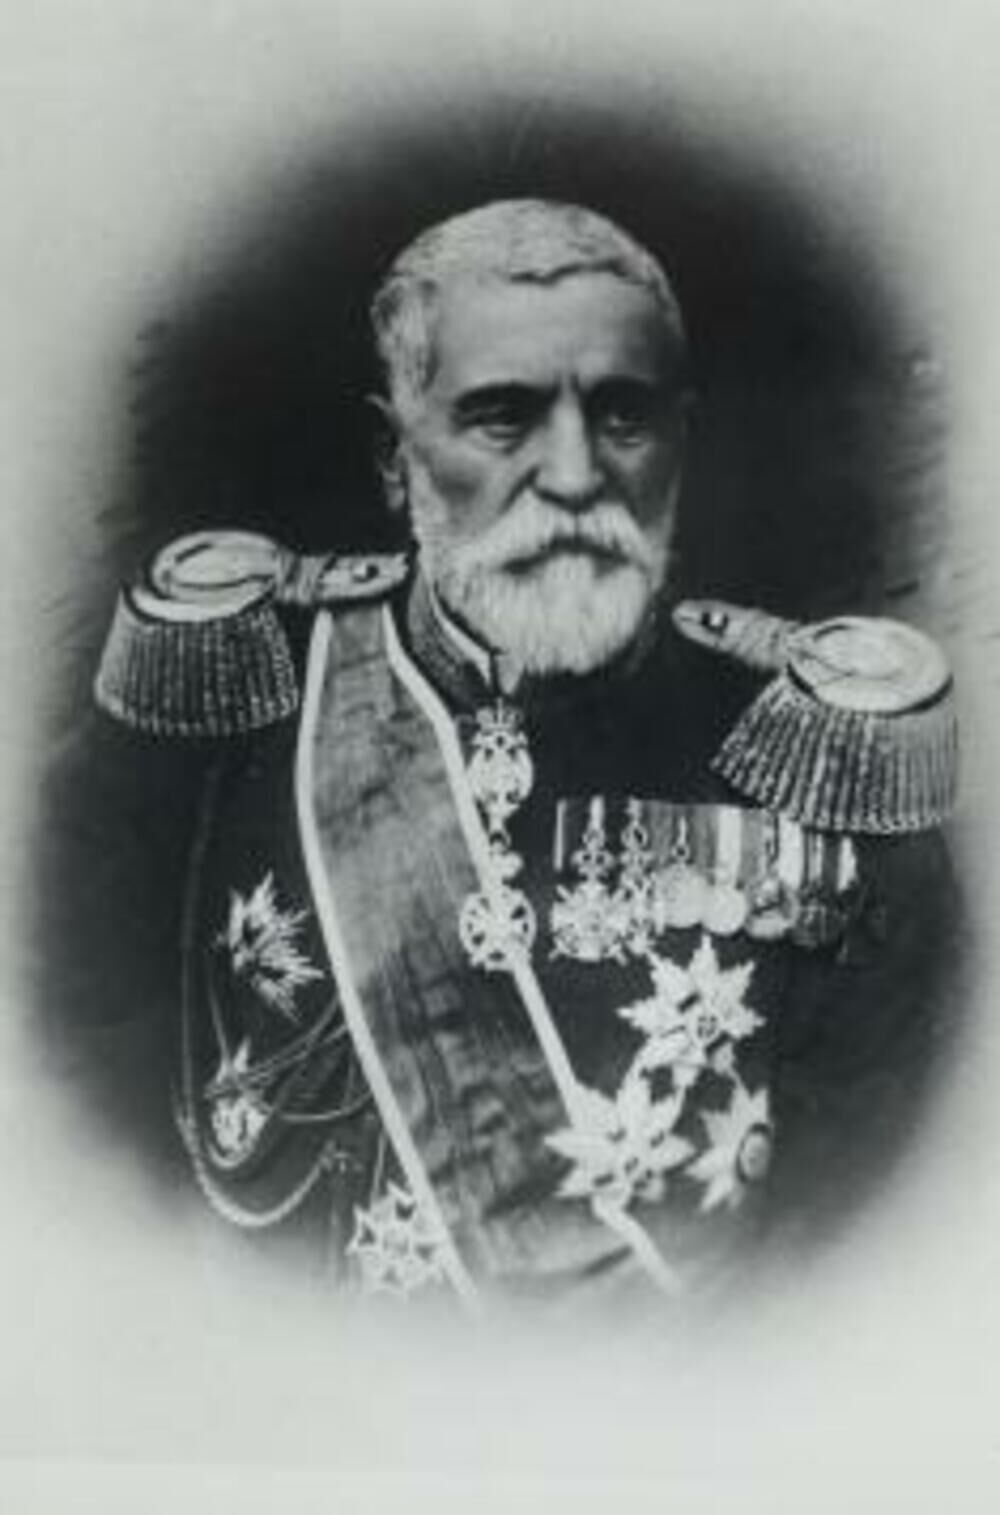 Vojvoda Radomir Putnik